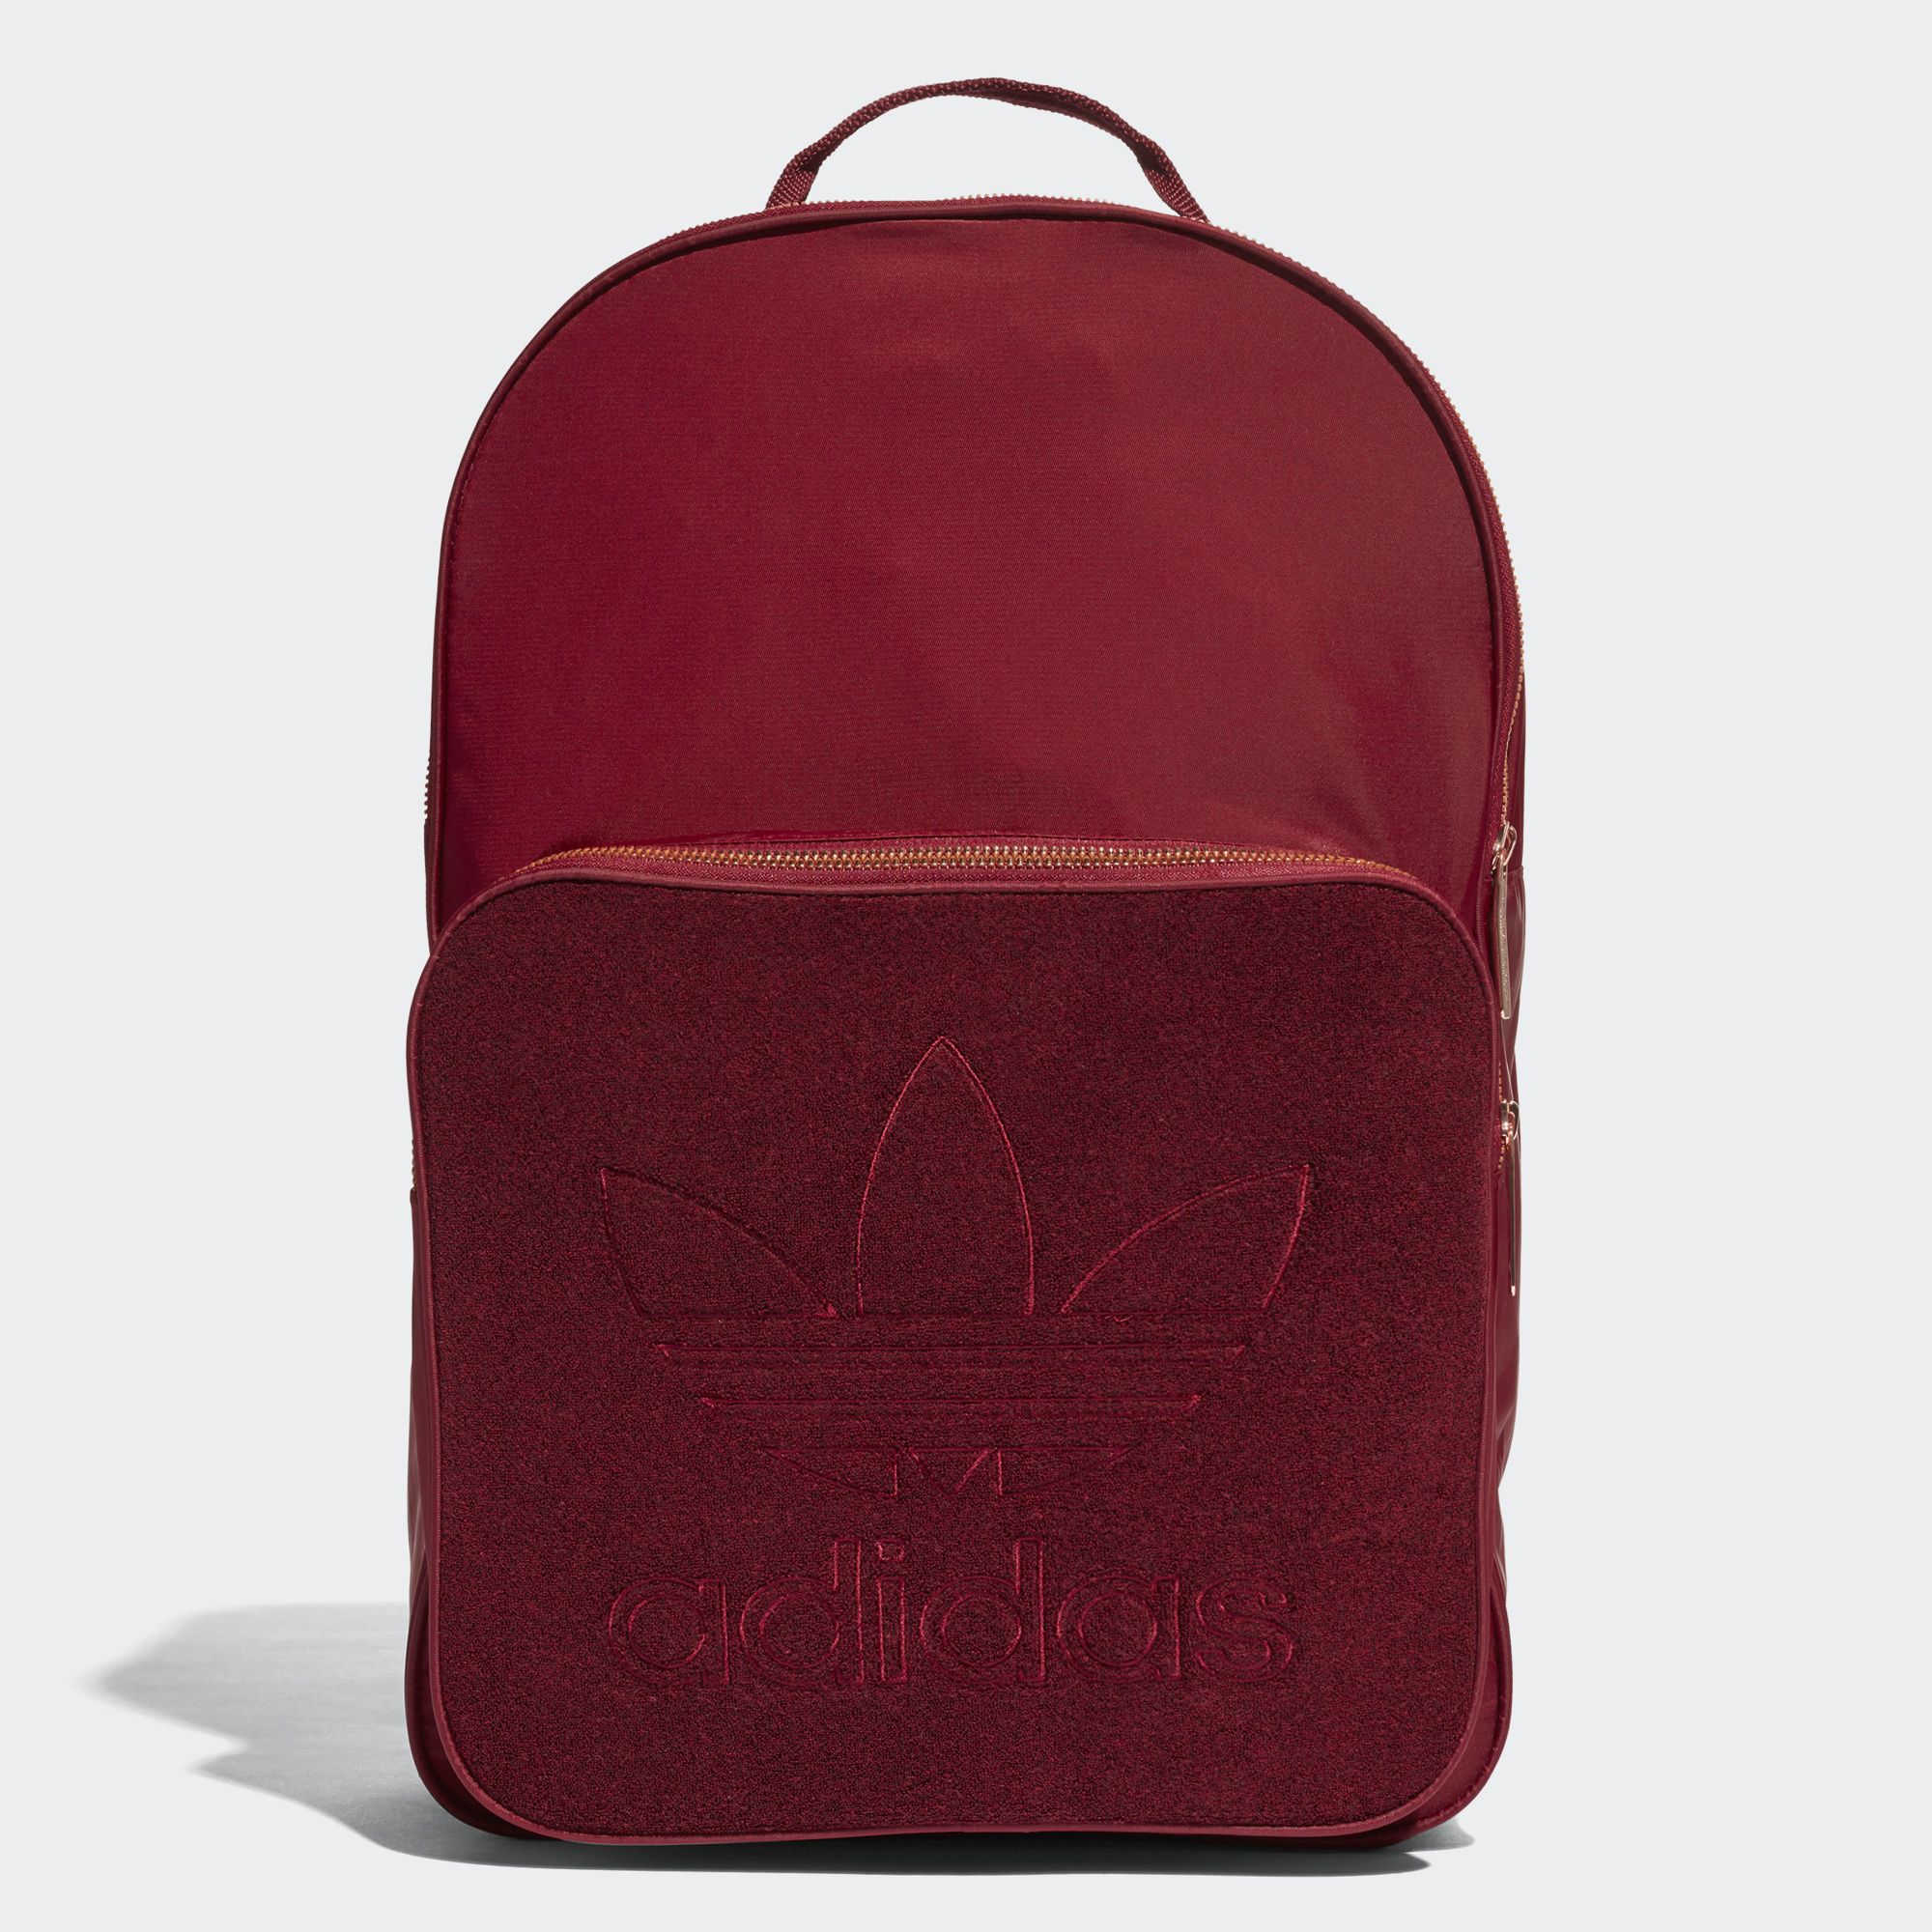 Adidas originals classic backpack 